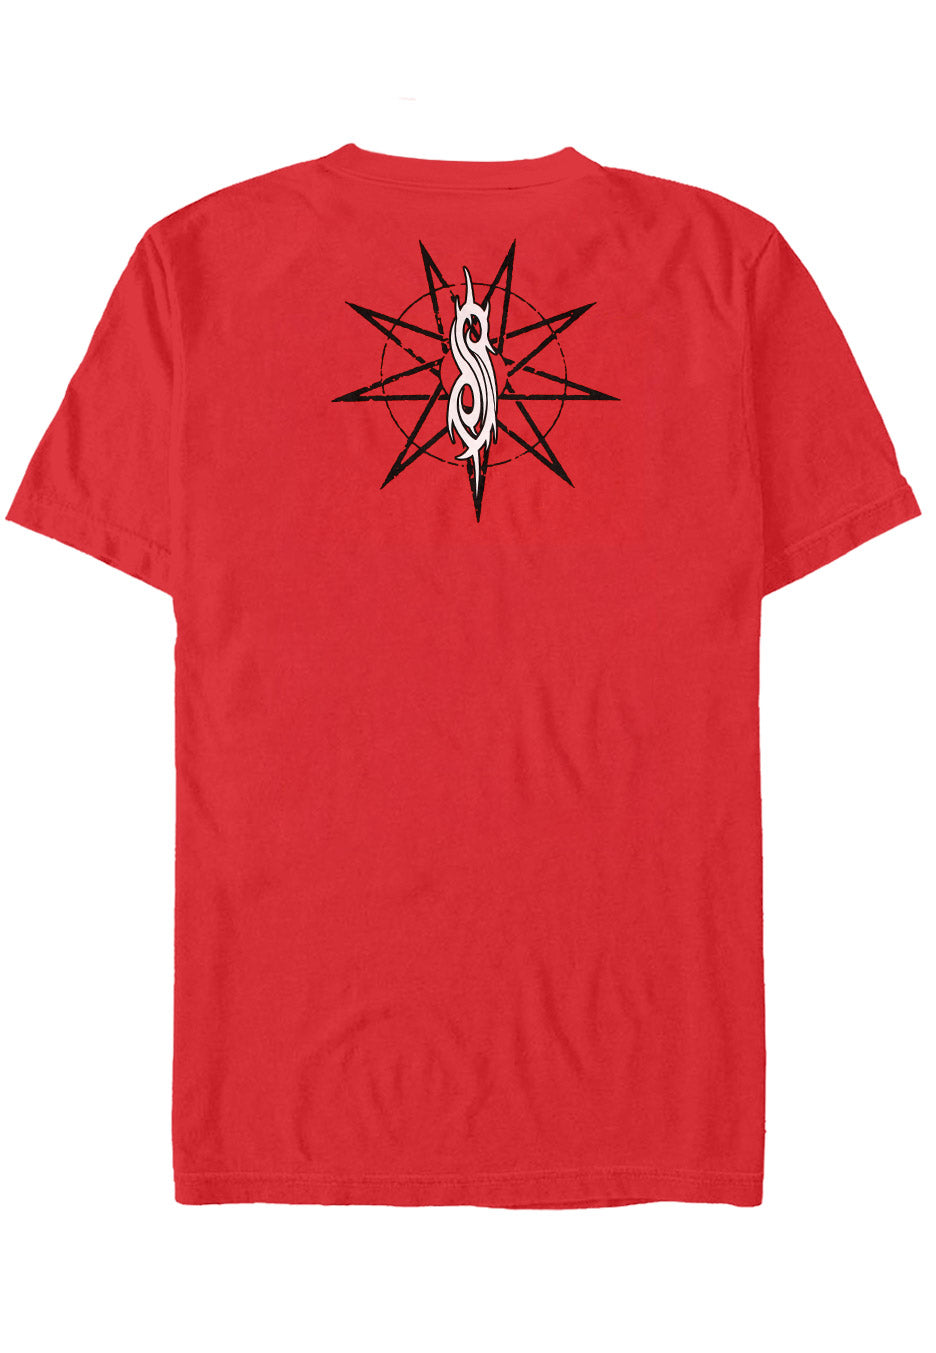 Slipknot - Grid Photo Red - T-Shirt